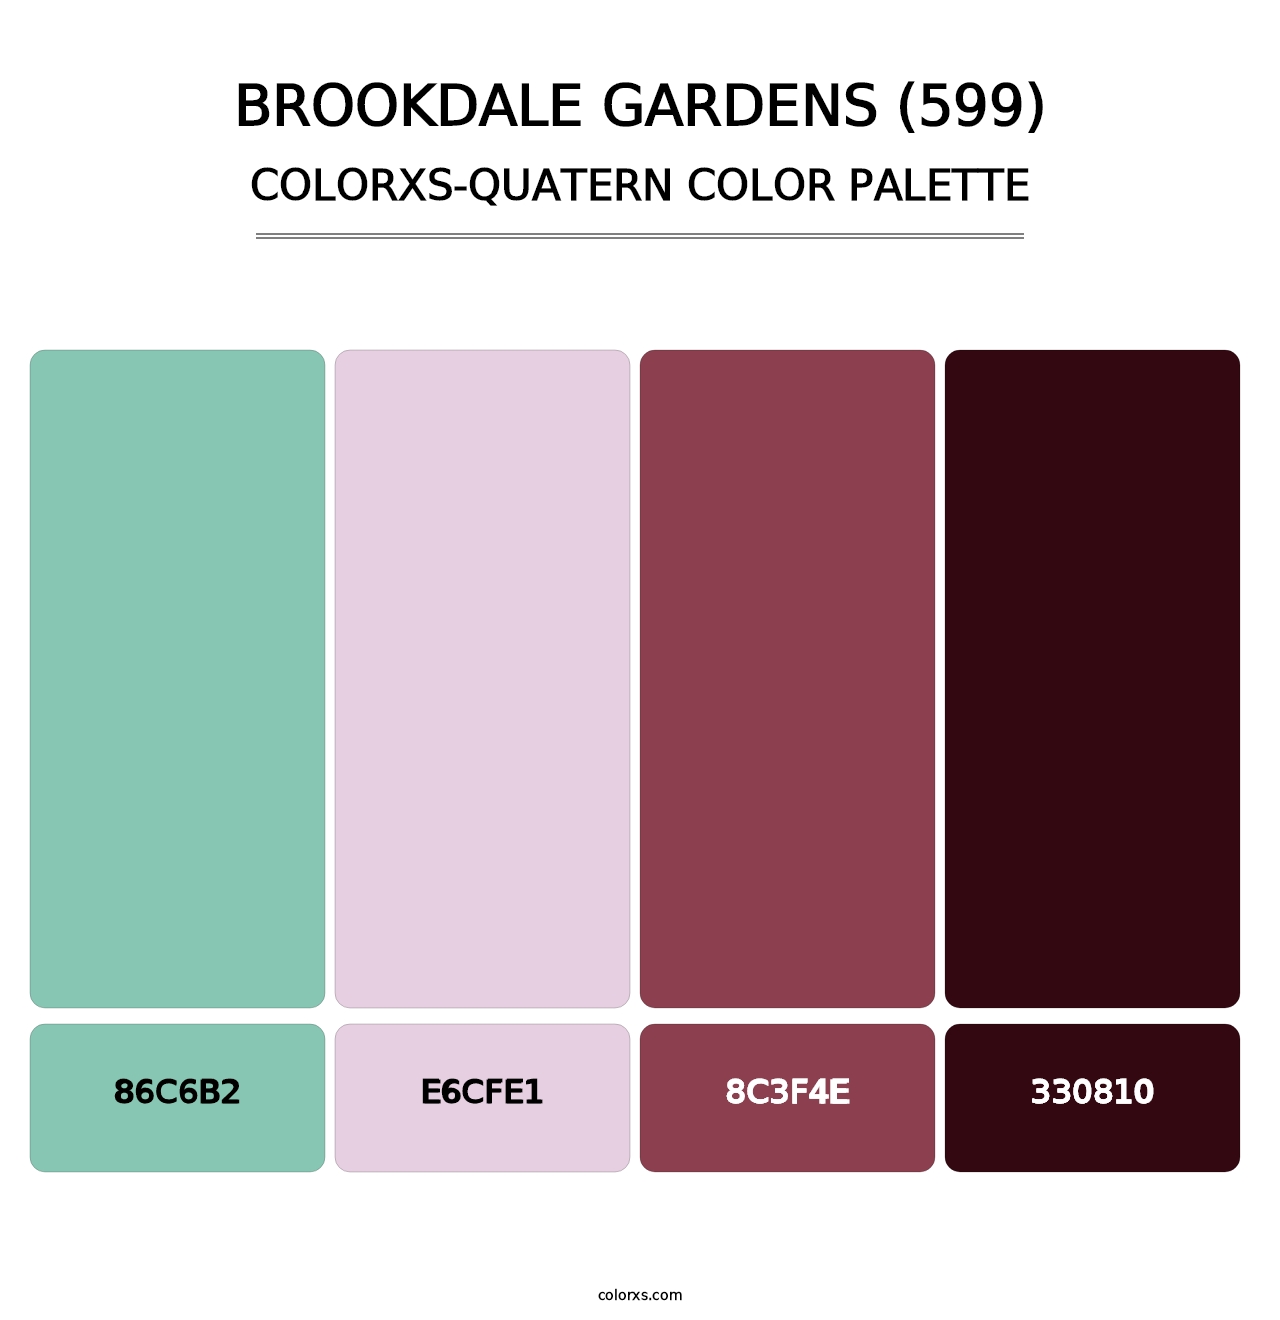 Brookdale Gardens (599) - Colorxs Quatern Palette